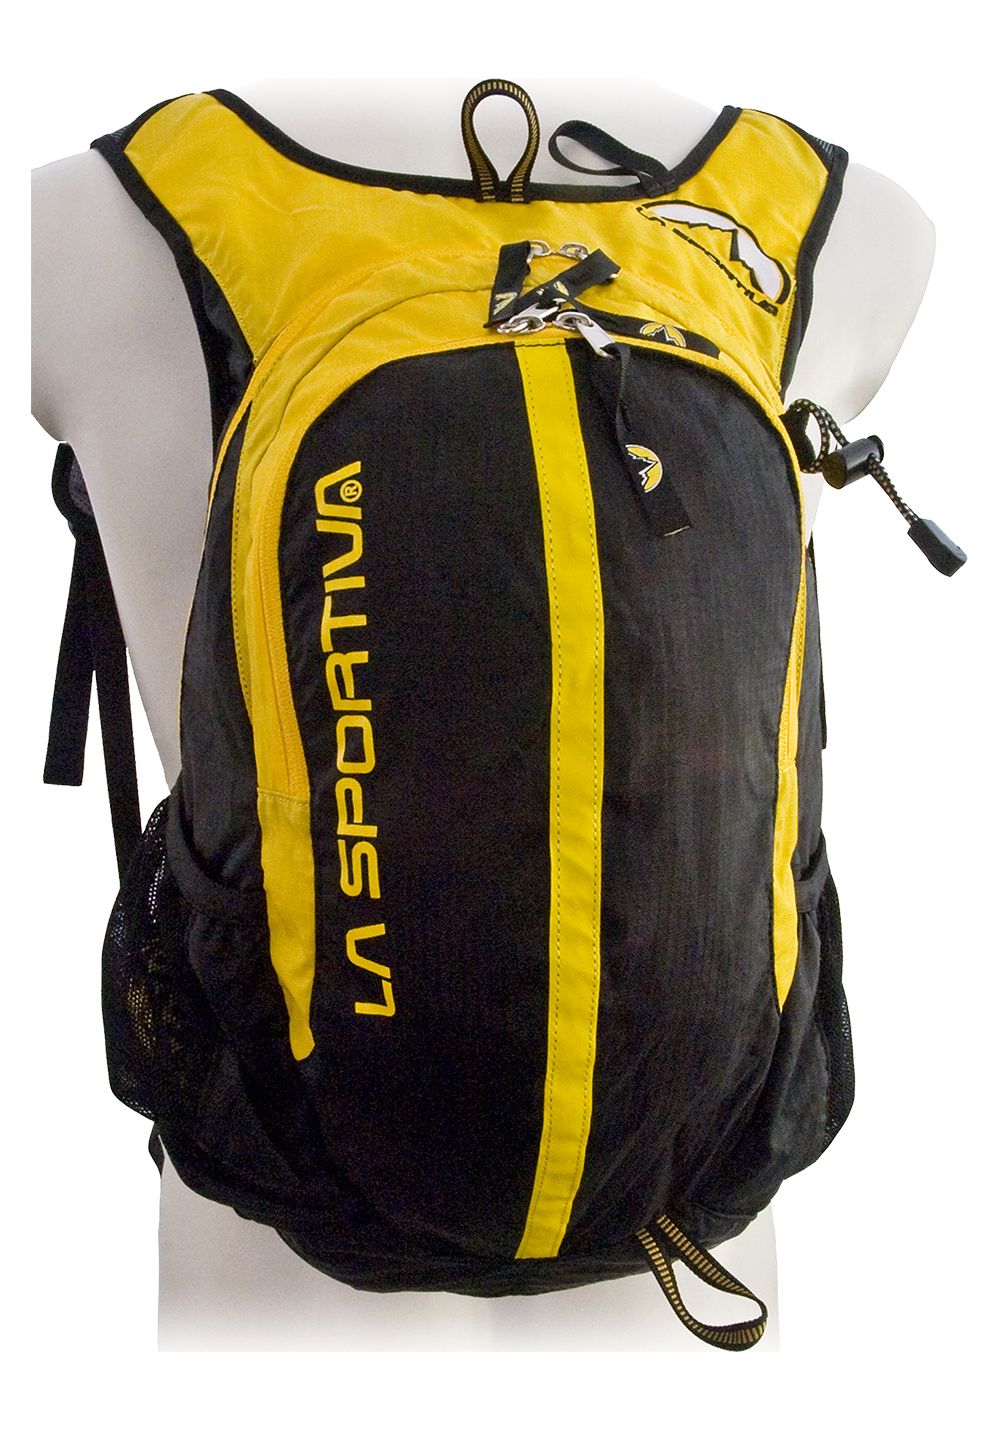 La Sportiva - Рюкзак спортивный легкий Backpack Elite 20